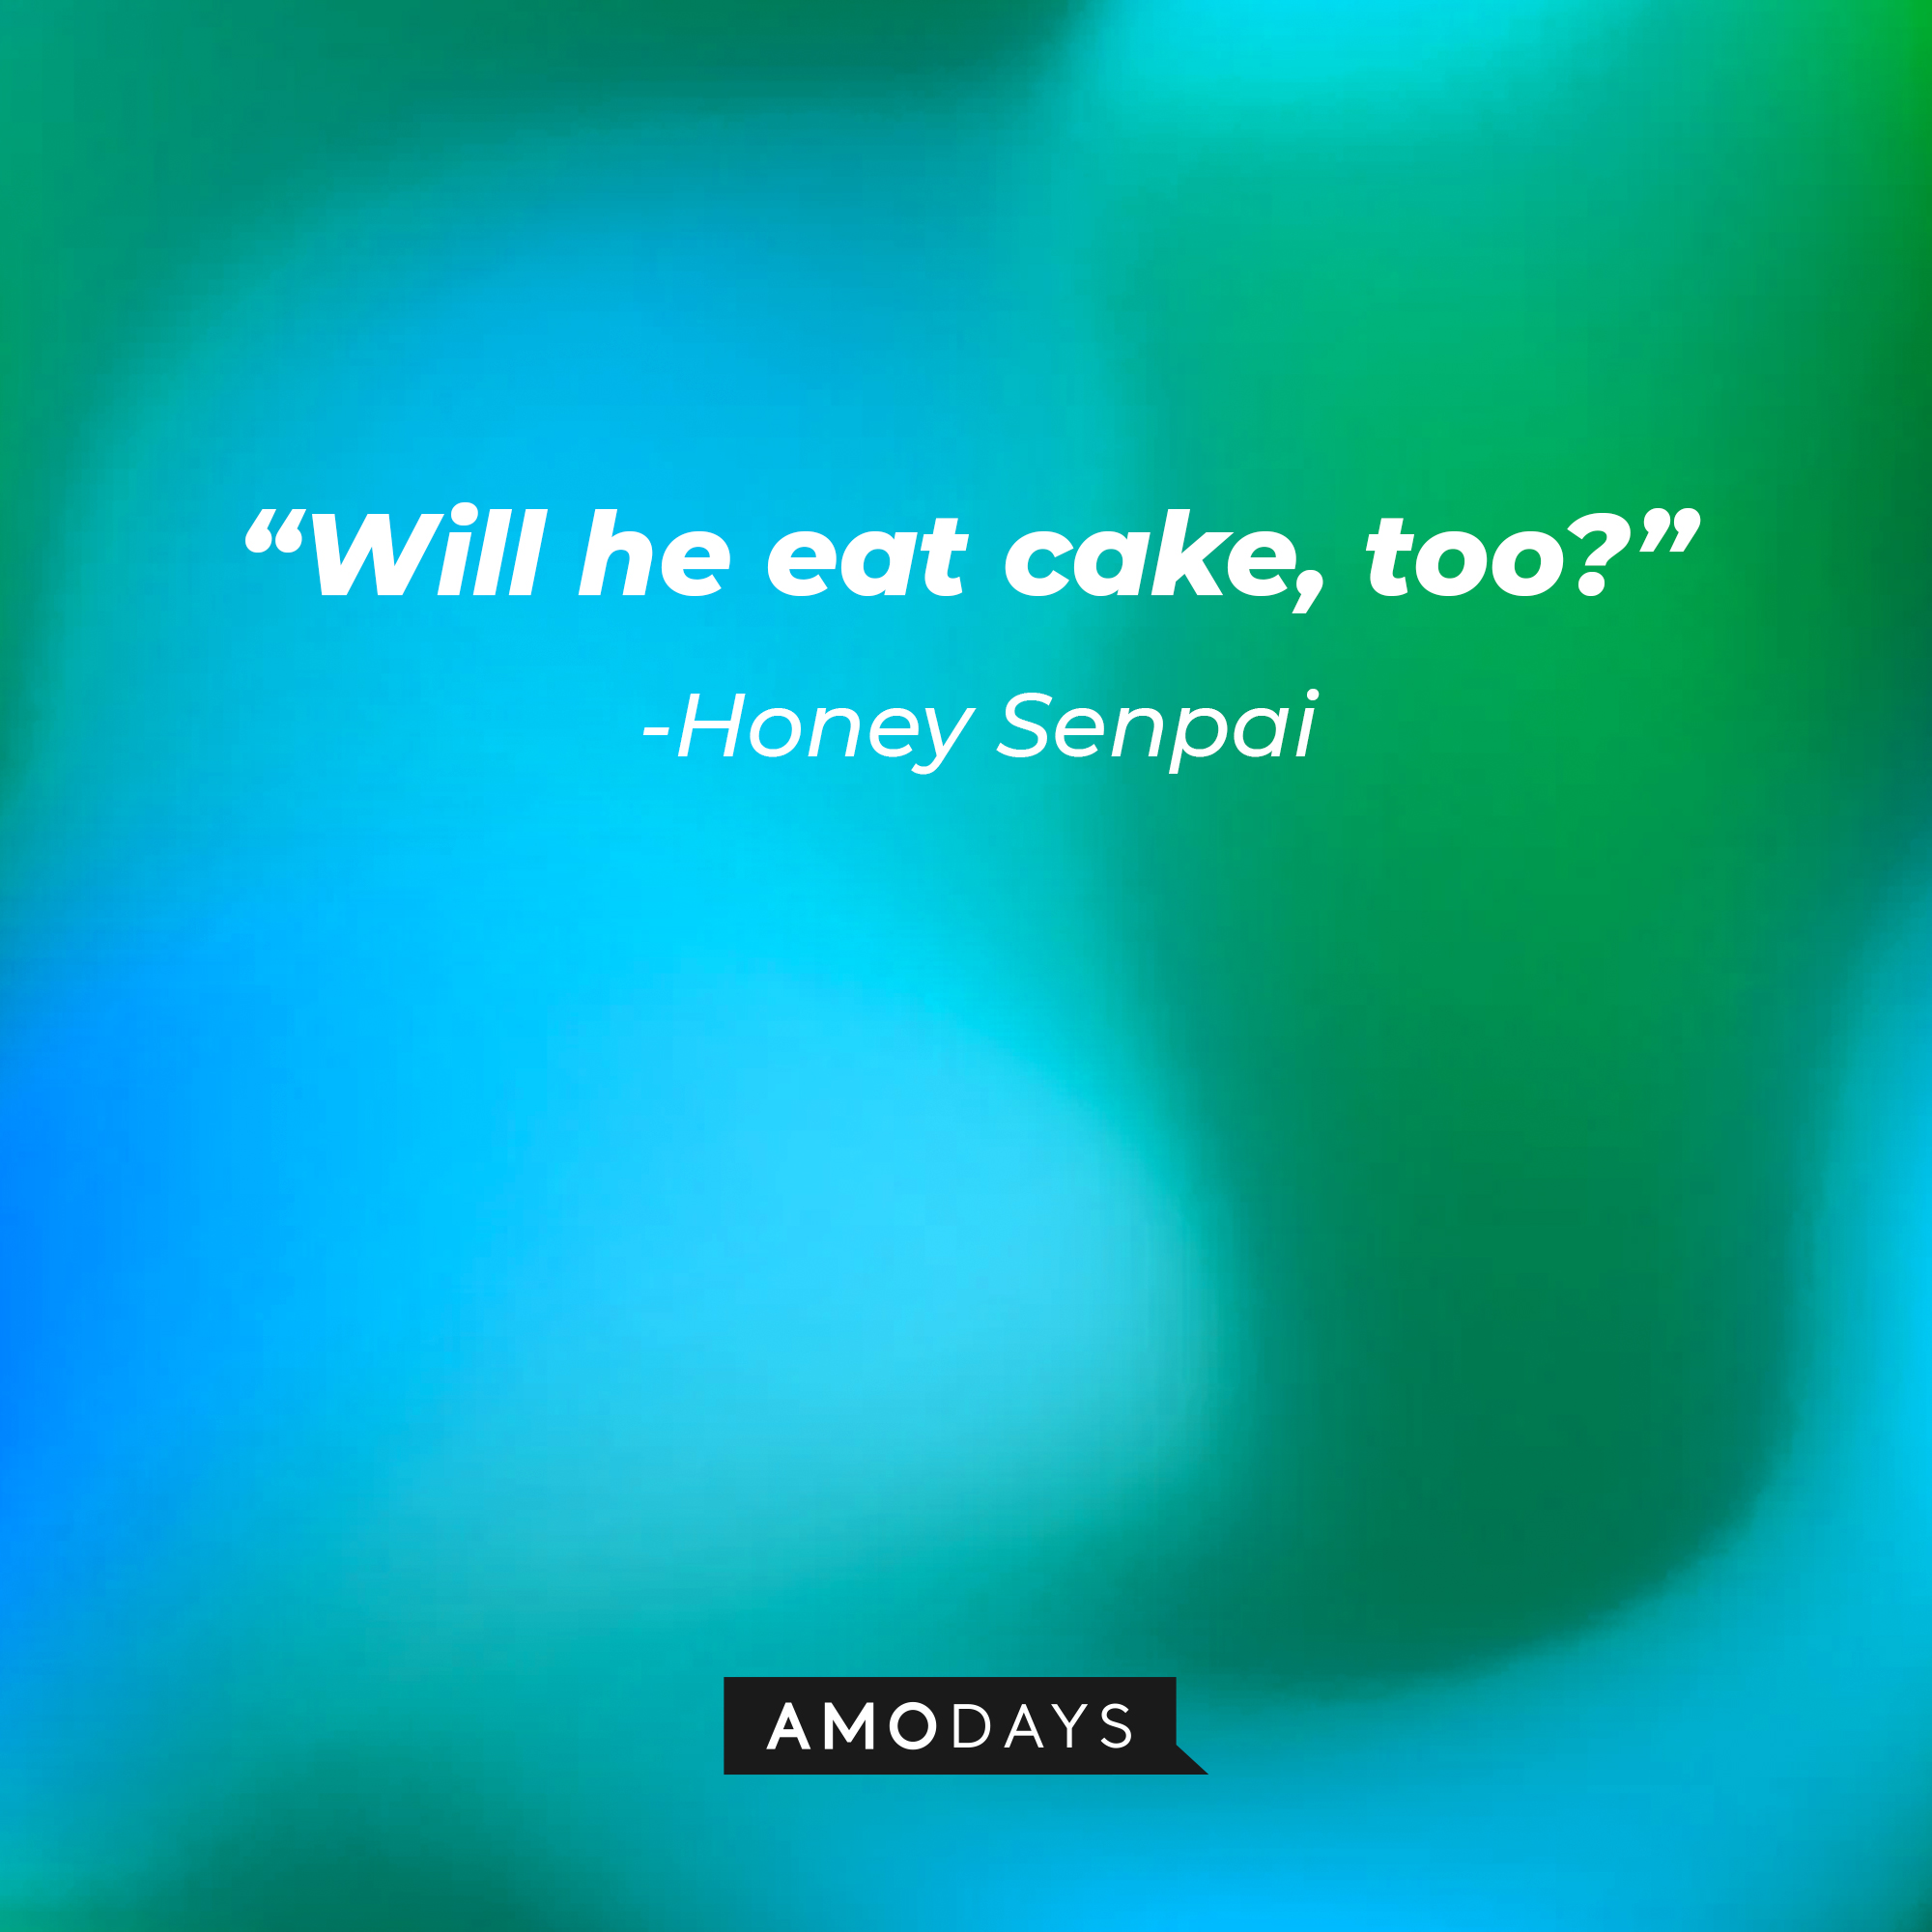 Honey Senpai’s quote: “Will he eat cake, too?” | Source: AmoDays